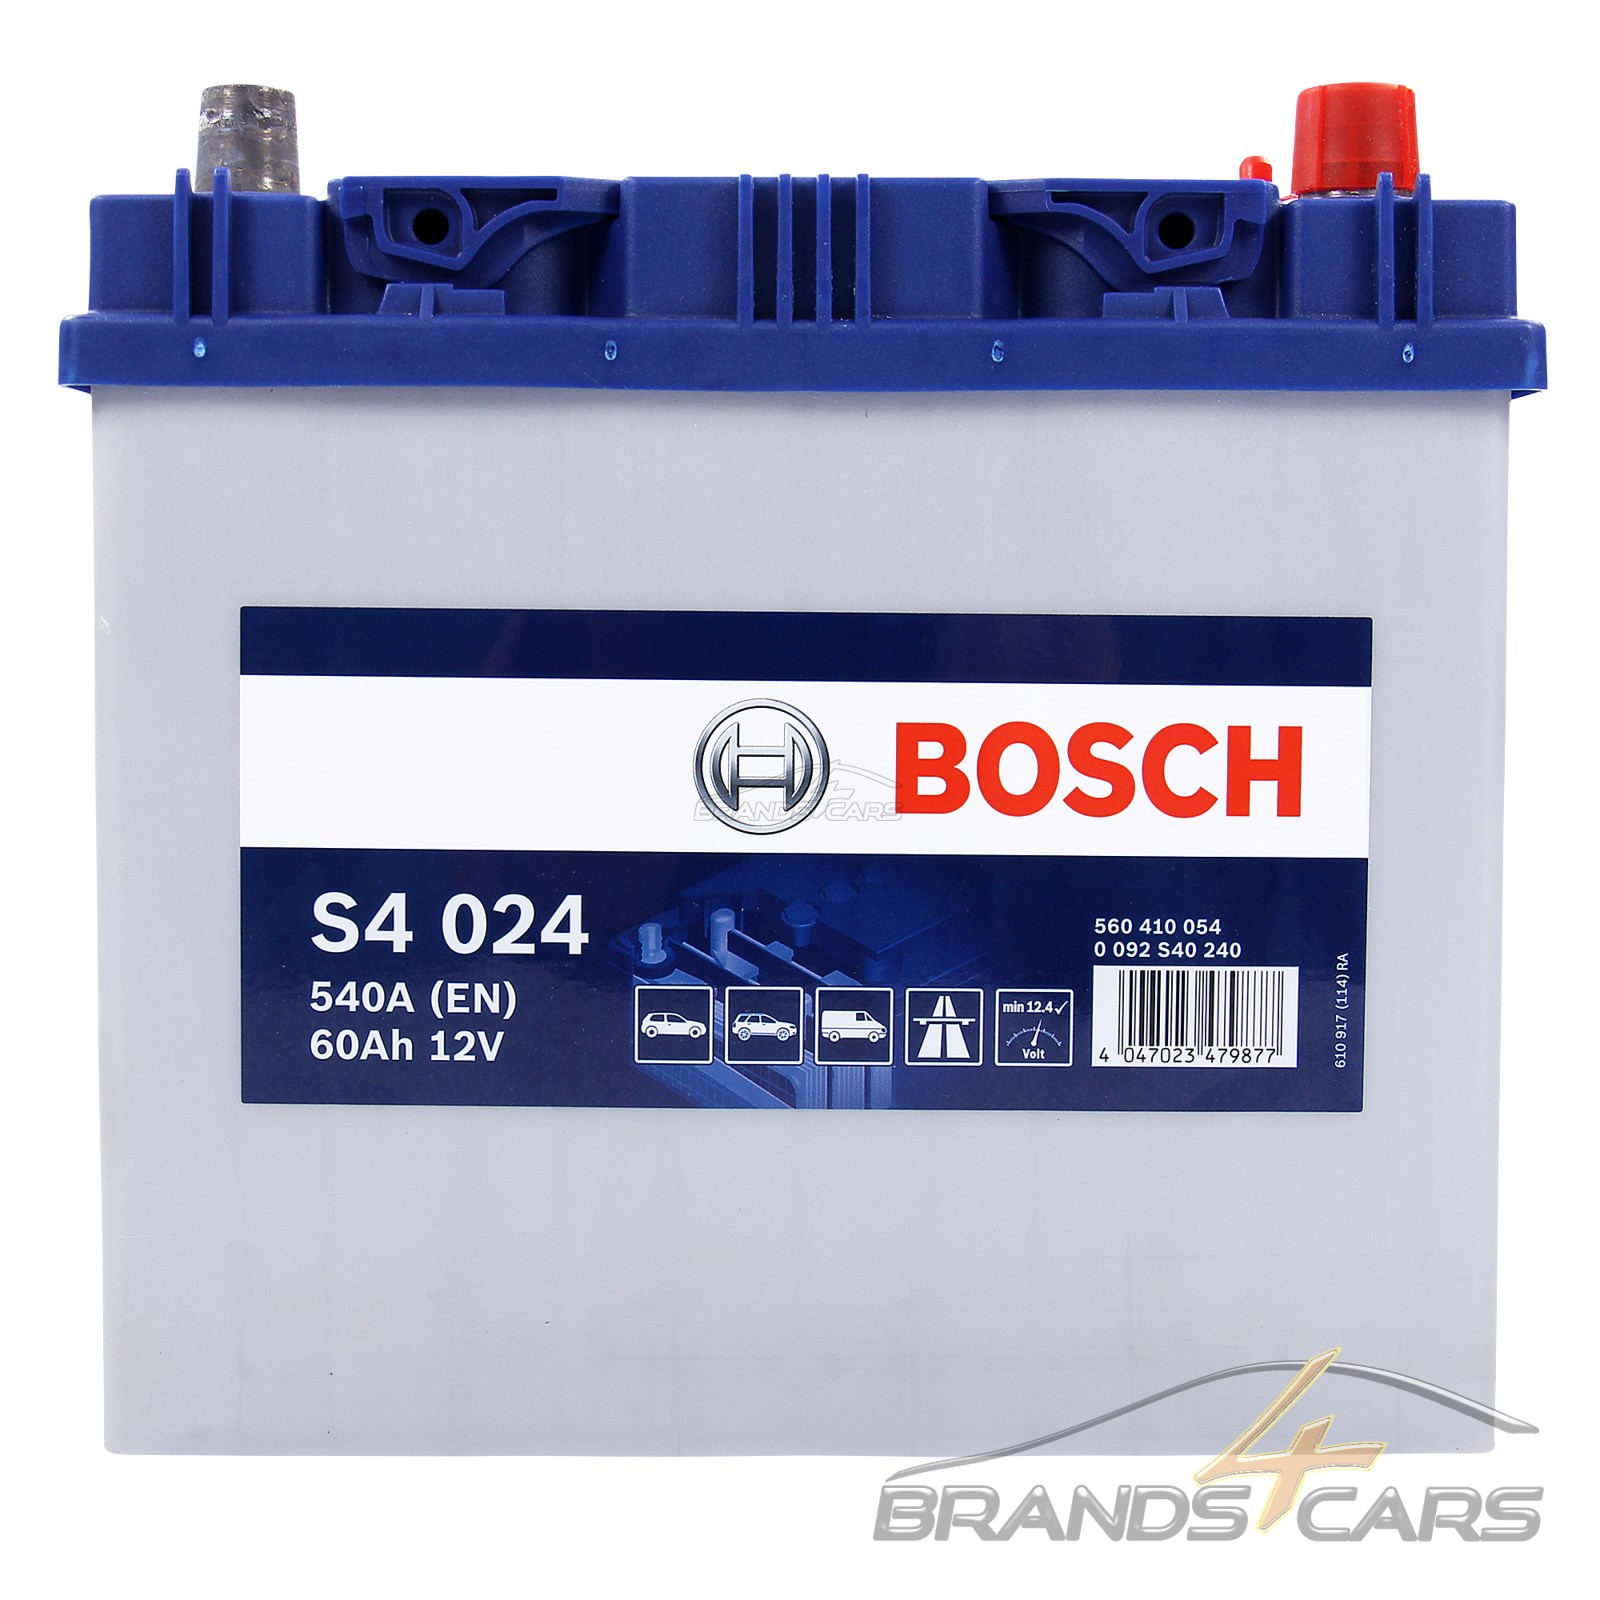 Bosch s4 купить. Аккумулятор Bosch s4 024. Аккумулятор Bosch Silver s4 025 60 а/ч. Аккумулятор Bosch s4013. S4 029 Bosch аккумулятор.